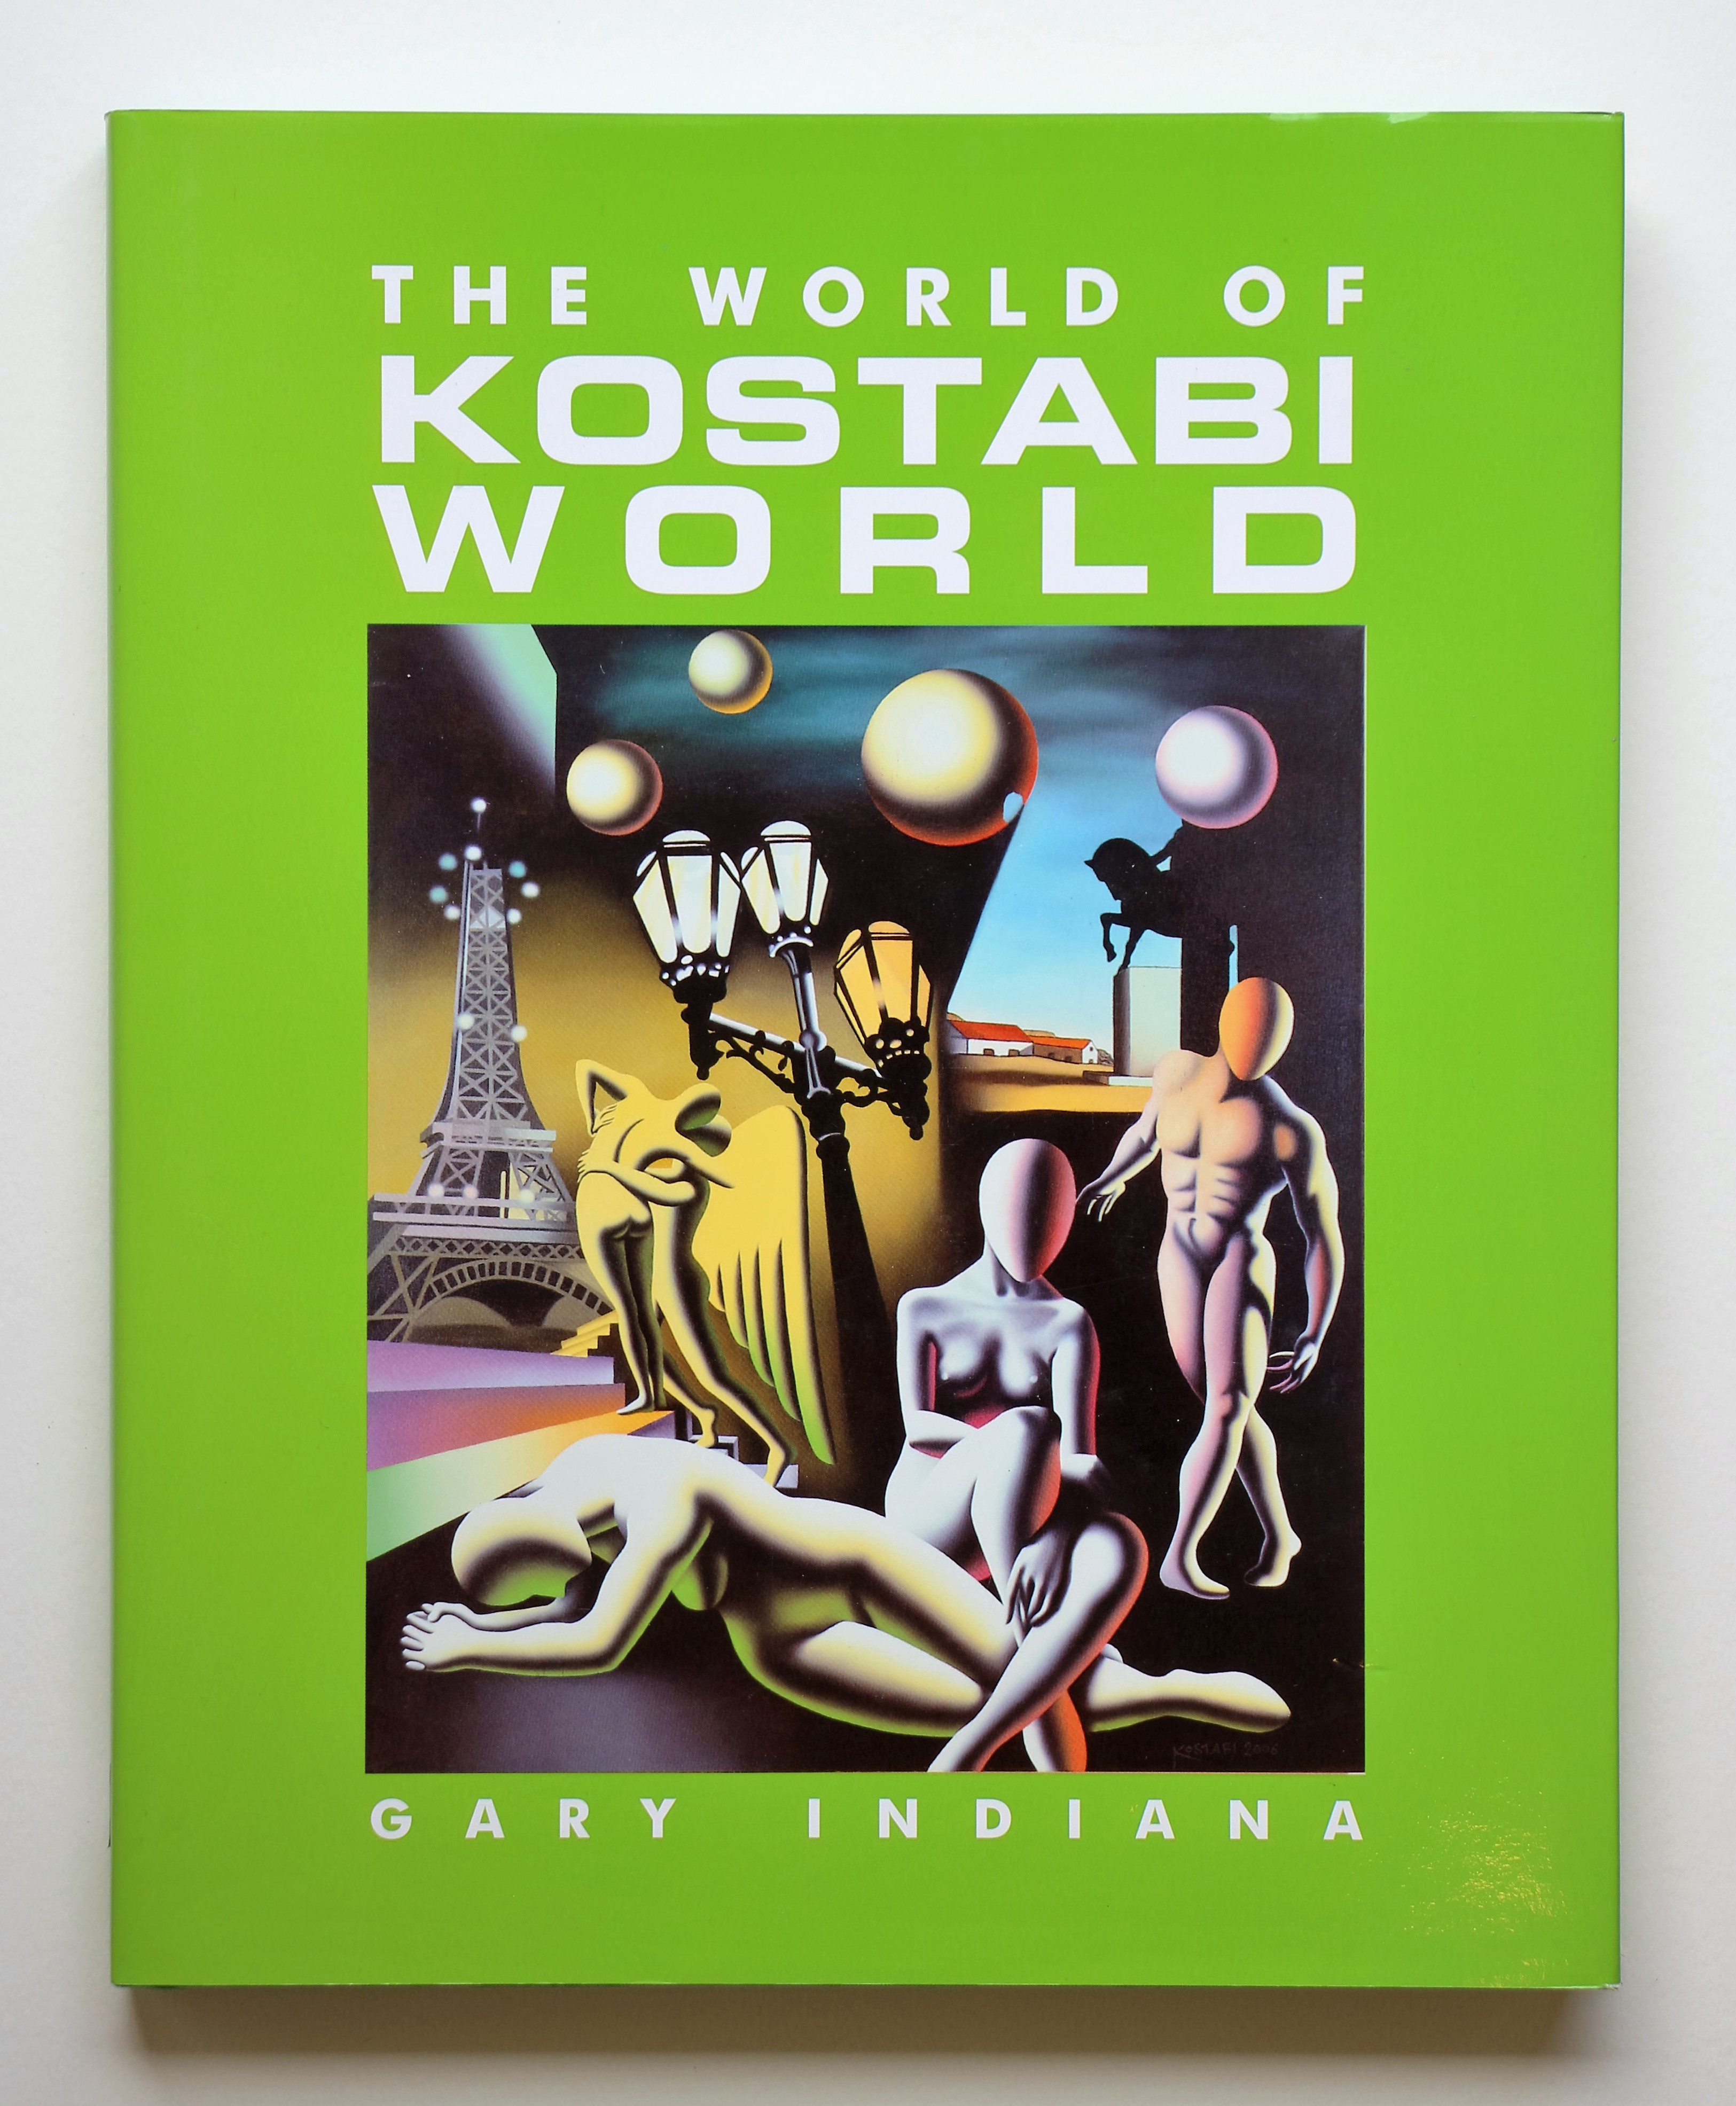 "The world of kostabi world" anno 2007 pagine 197 cm. 31x25